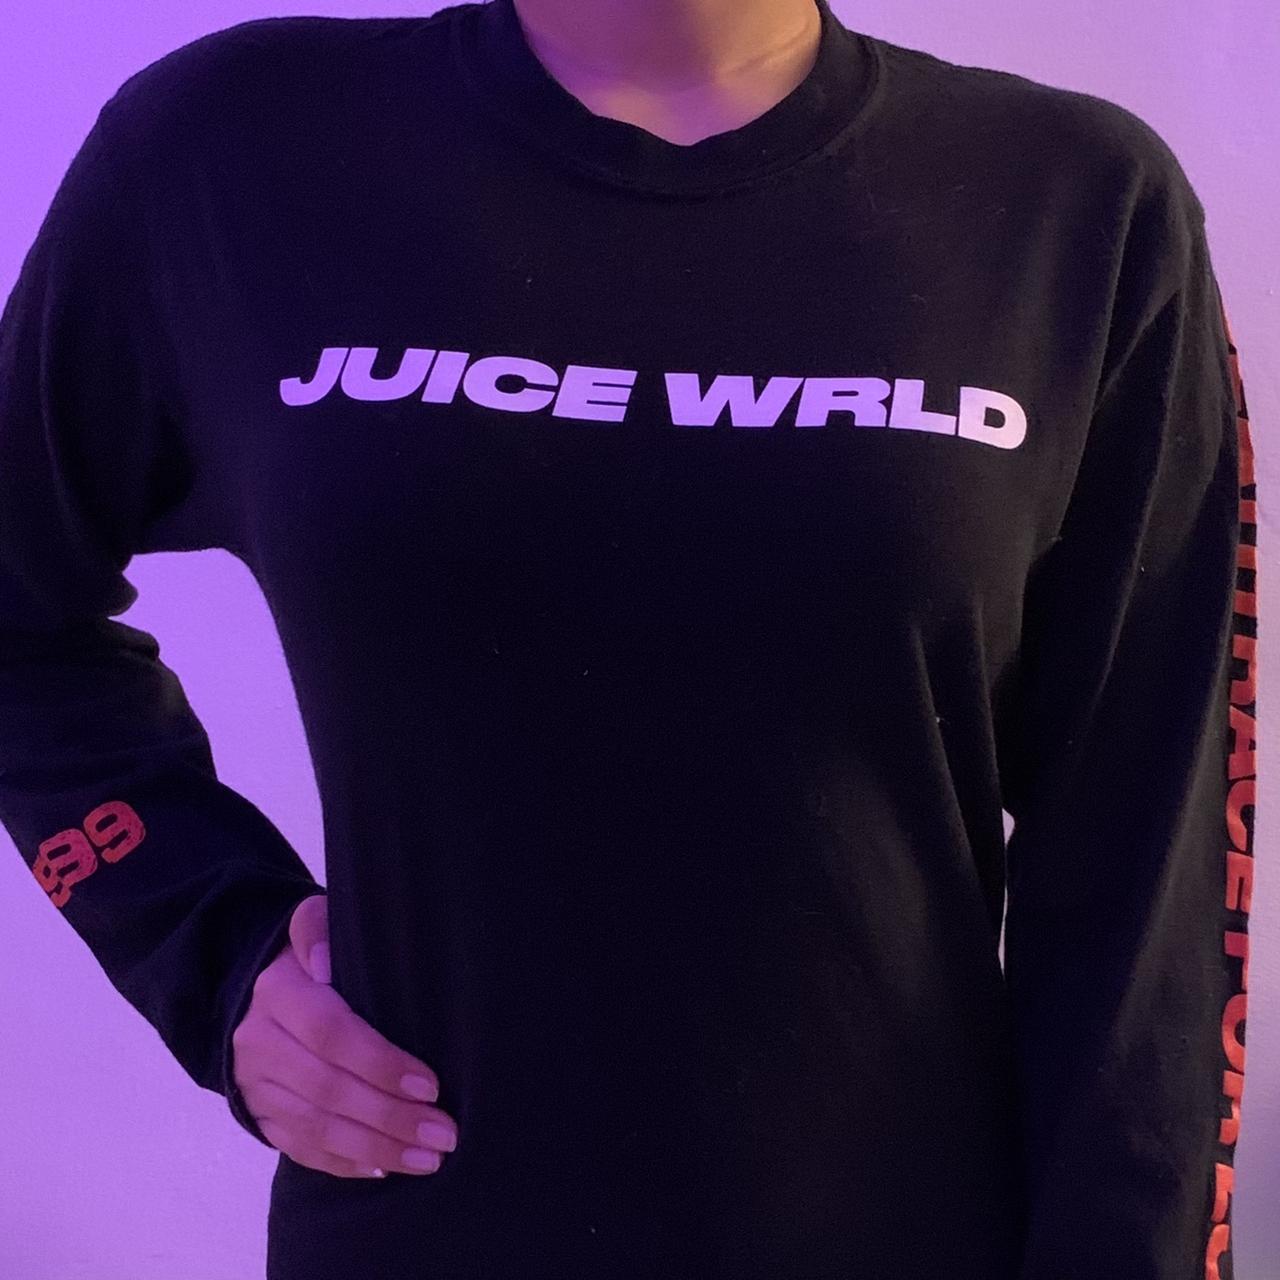 Juice WRLD Death Race T-Shirt